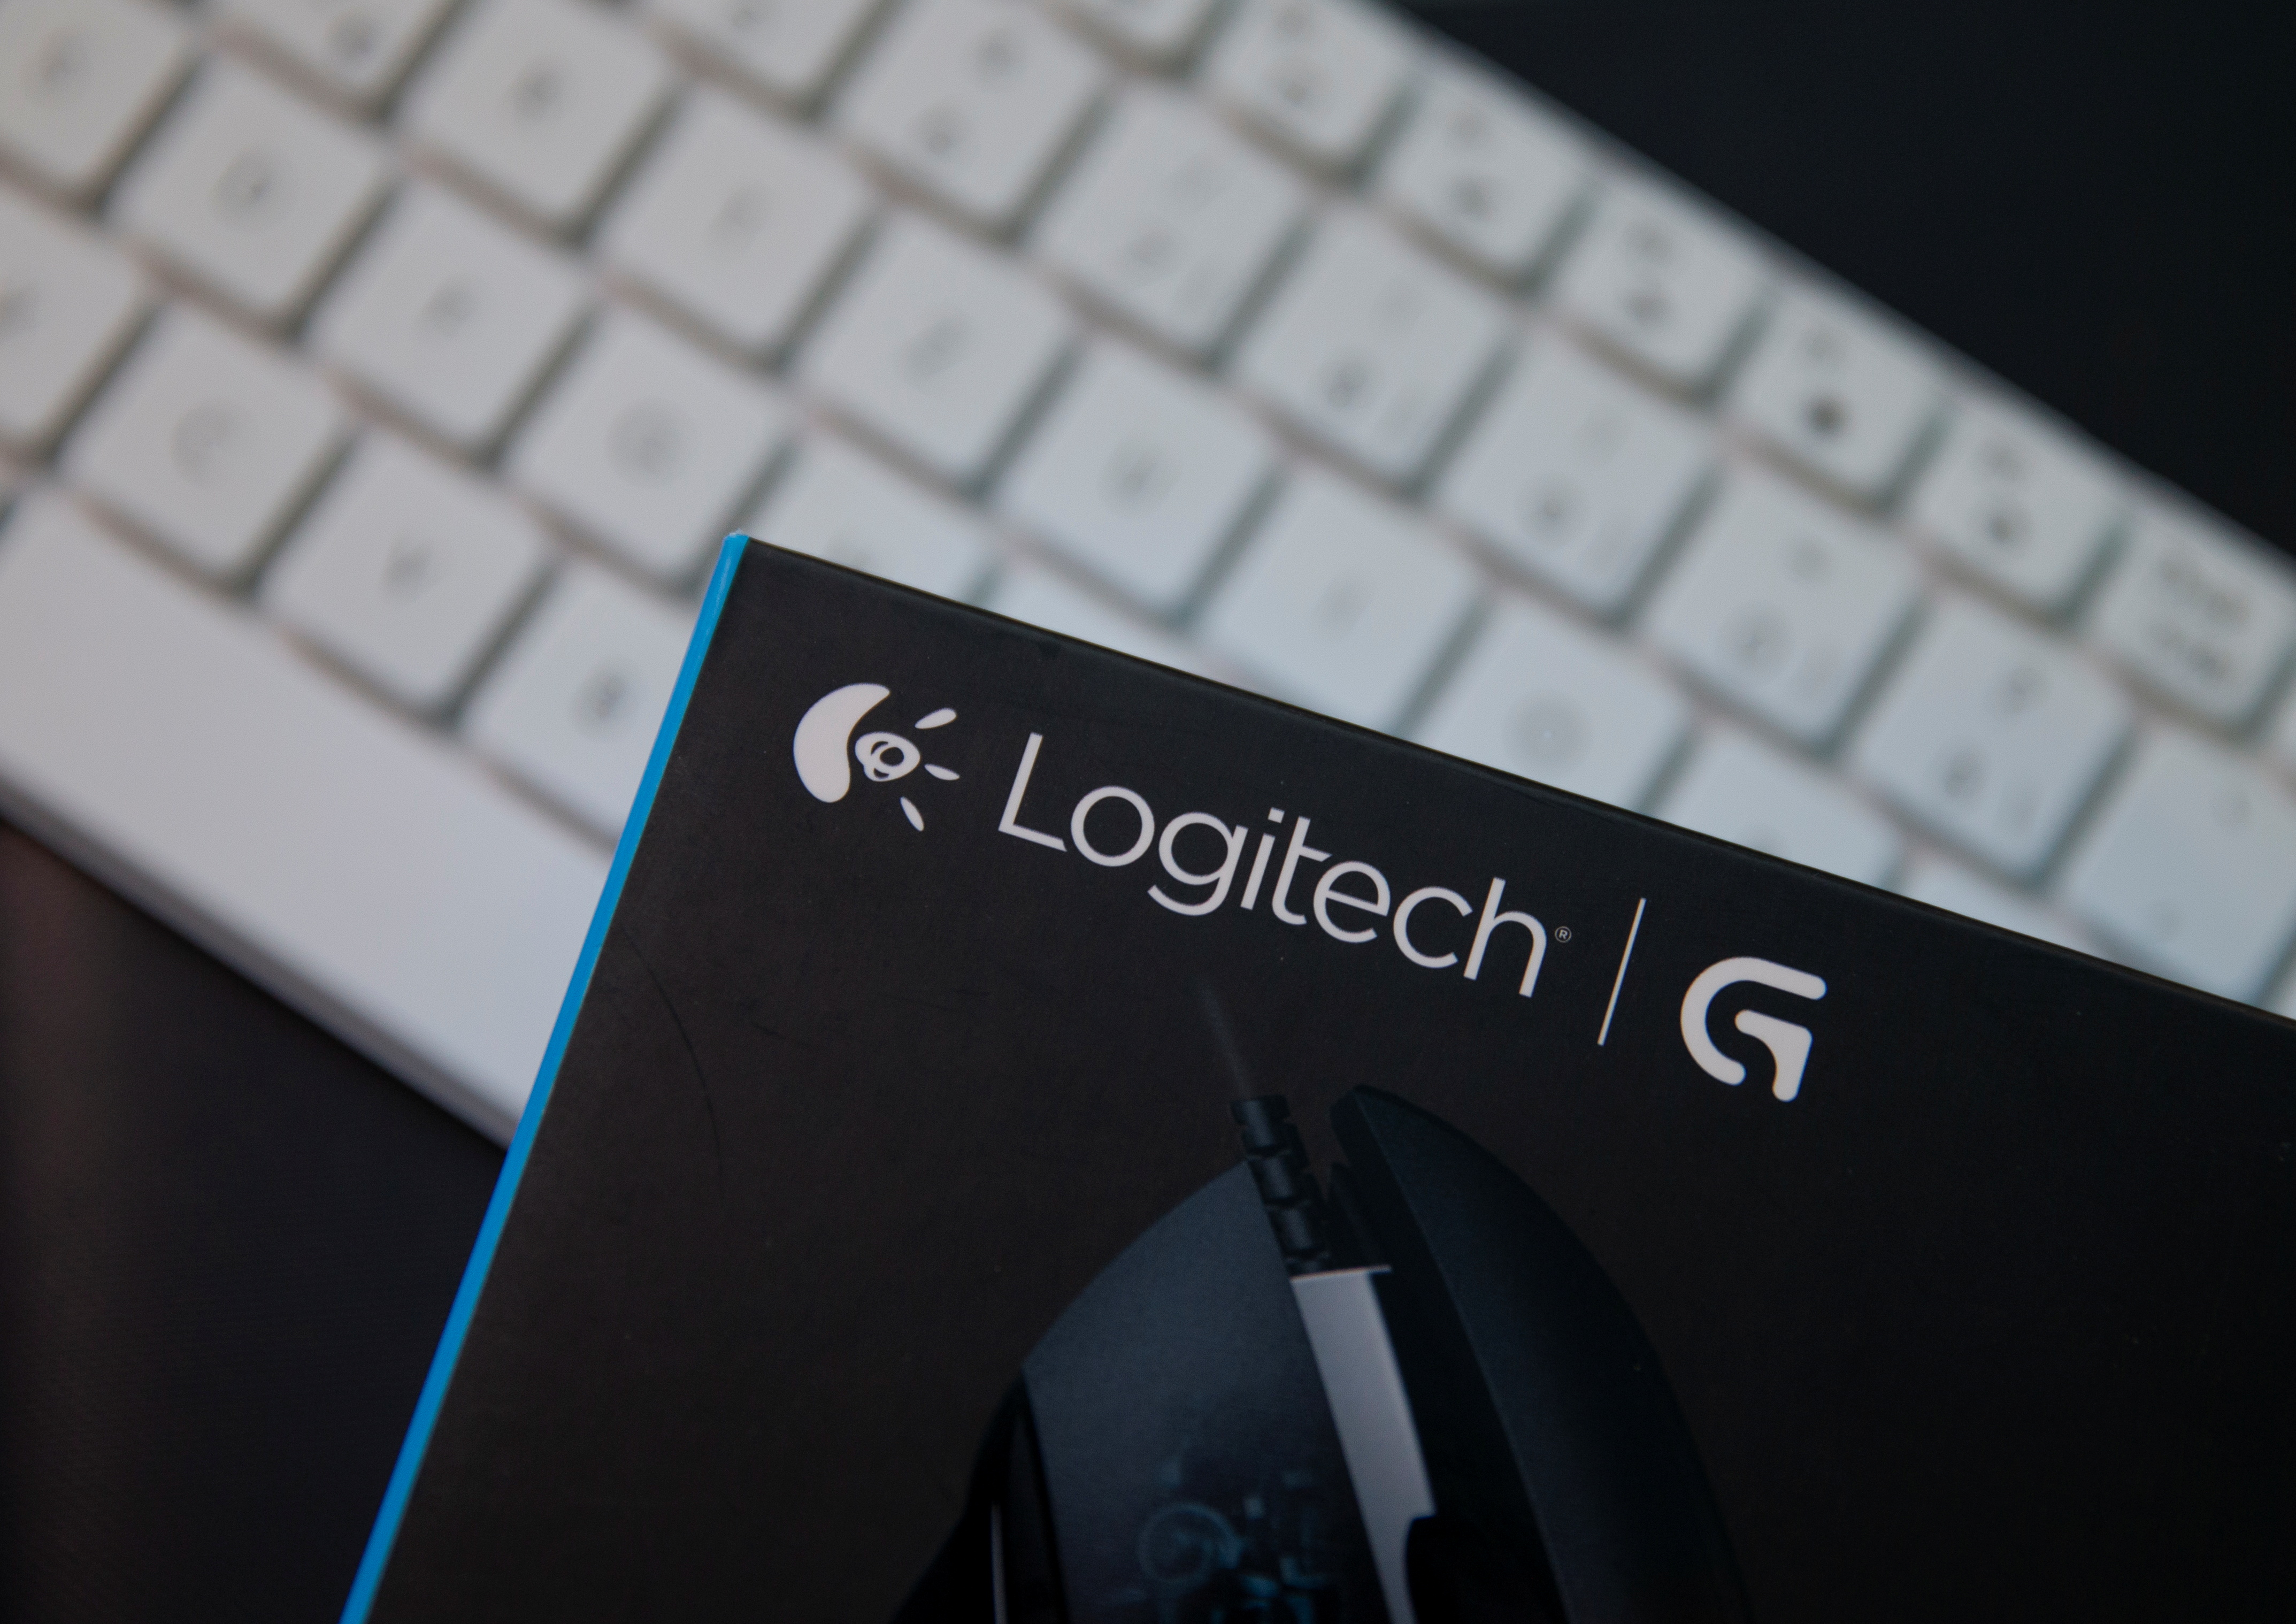 kompakt kighul nærme sig Computer mouse maker Logitech hit by supply chain problems | Reuters